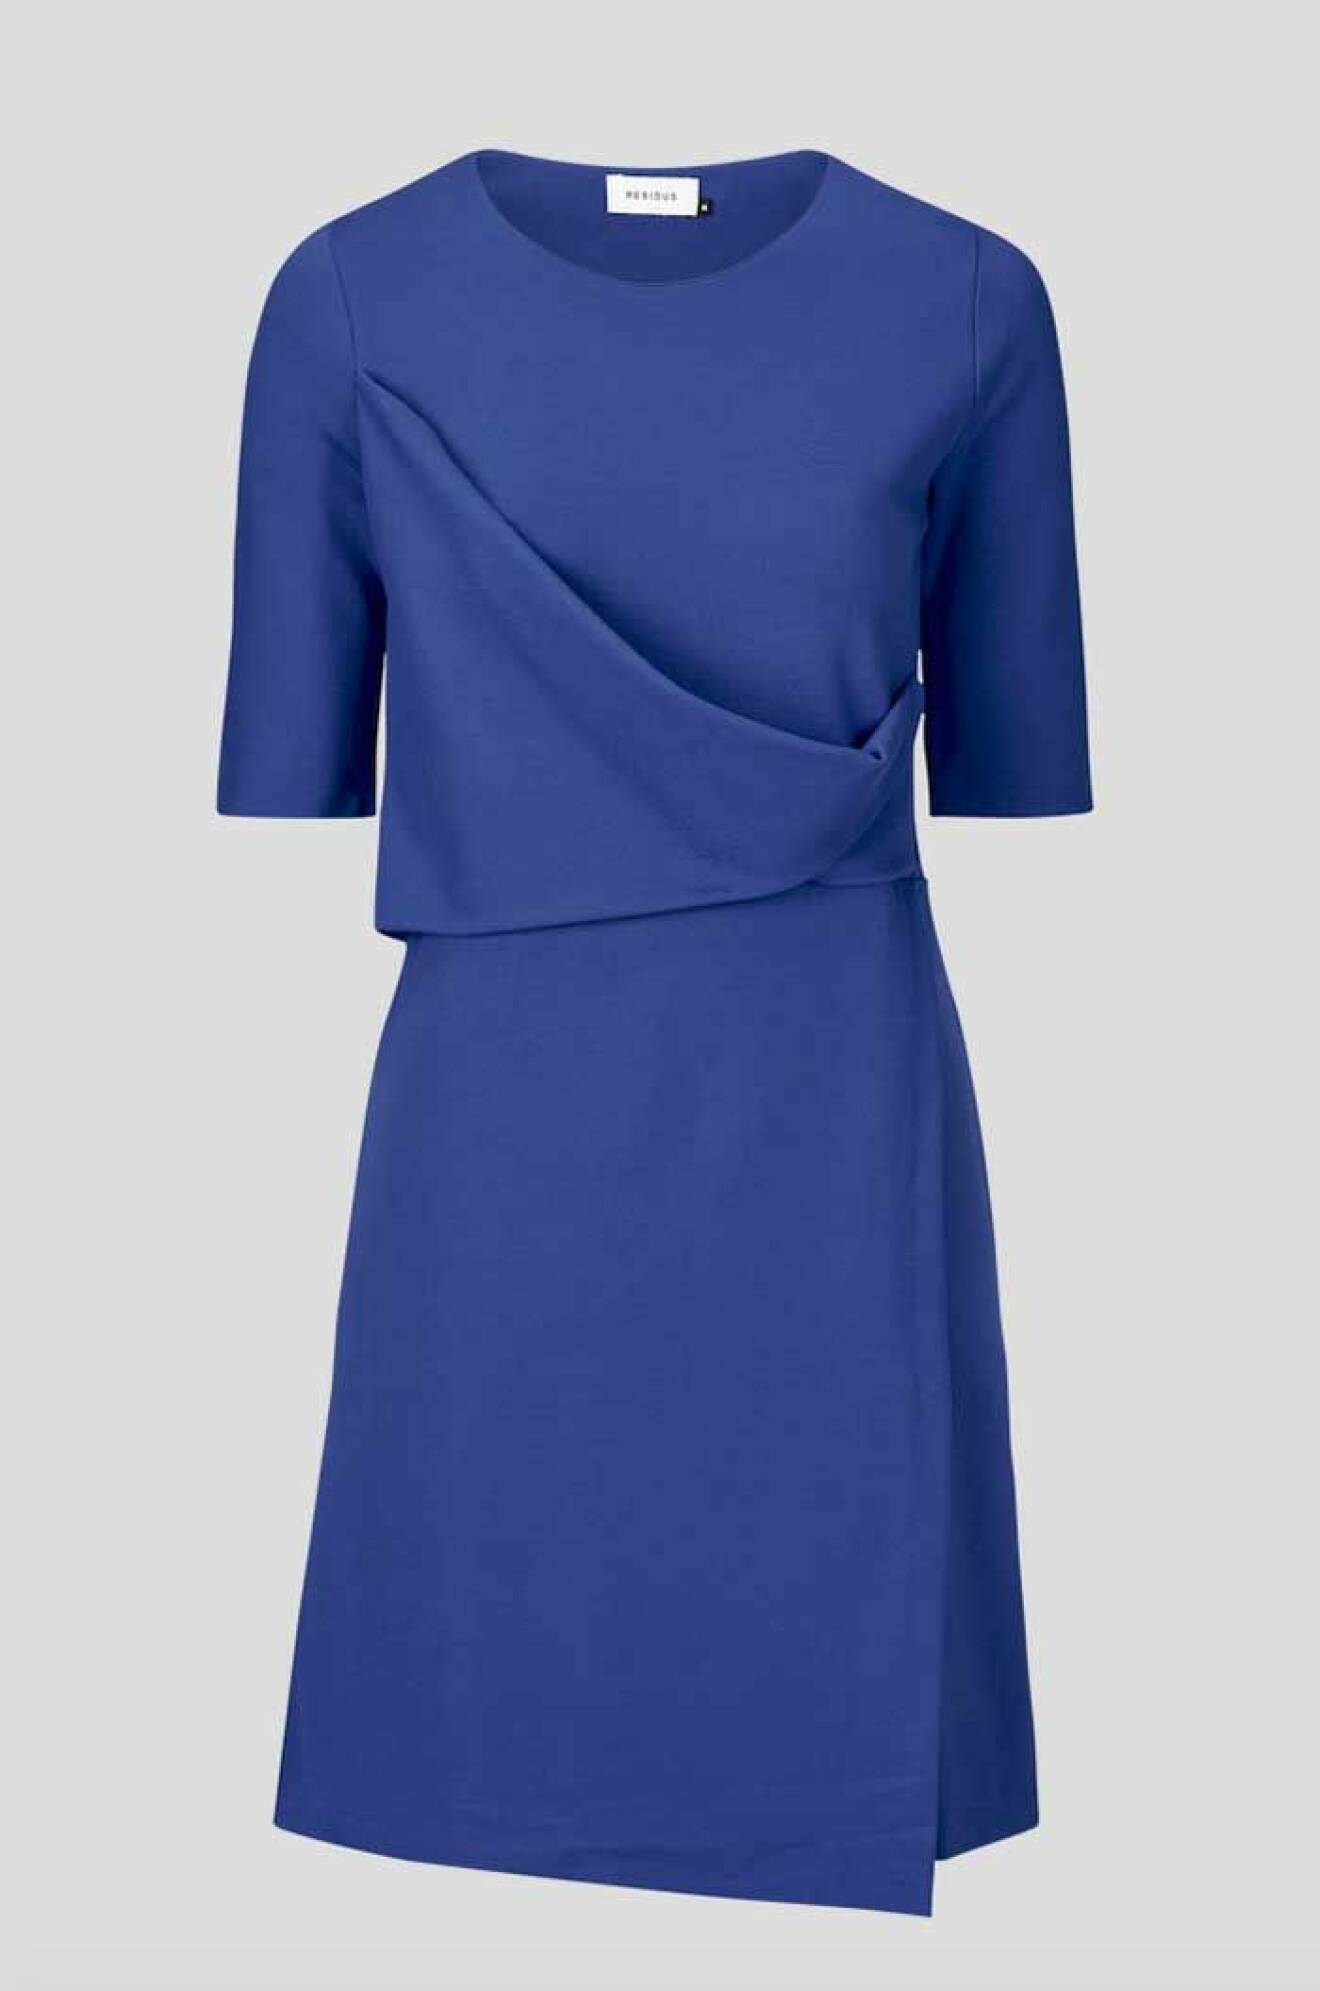 Koboltblå klänning